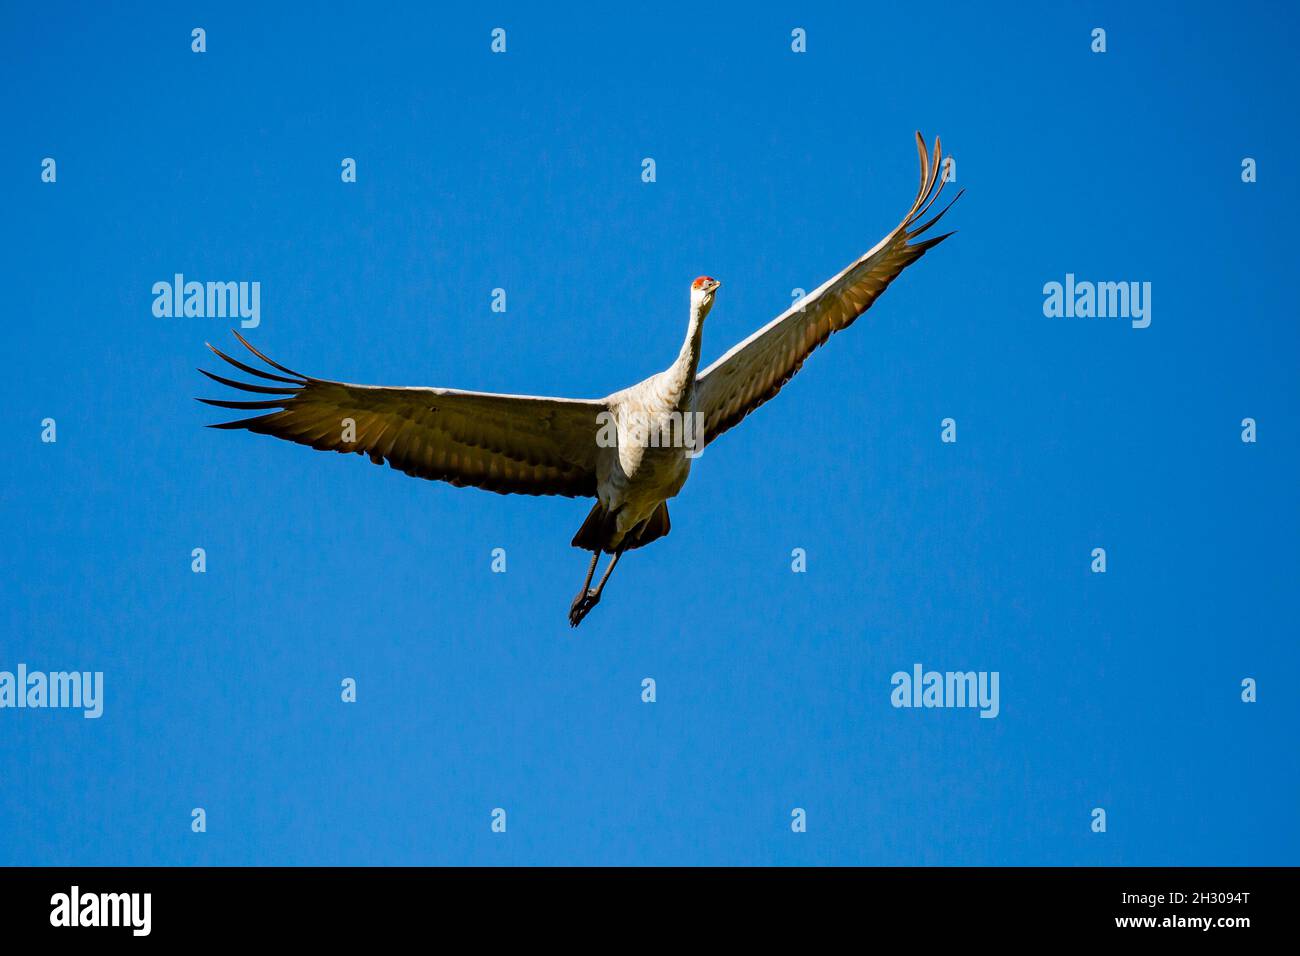 Grue de sable (Grus canadensis) volant dans un ciel bleu, horizontal Banque D'Images